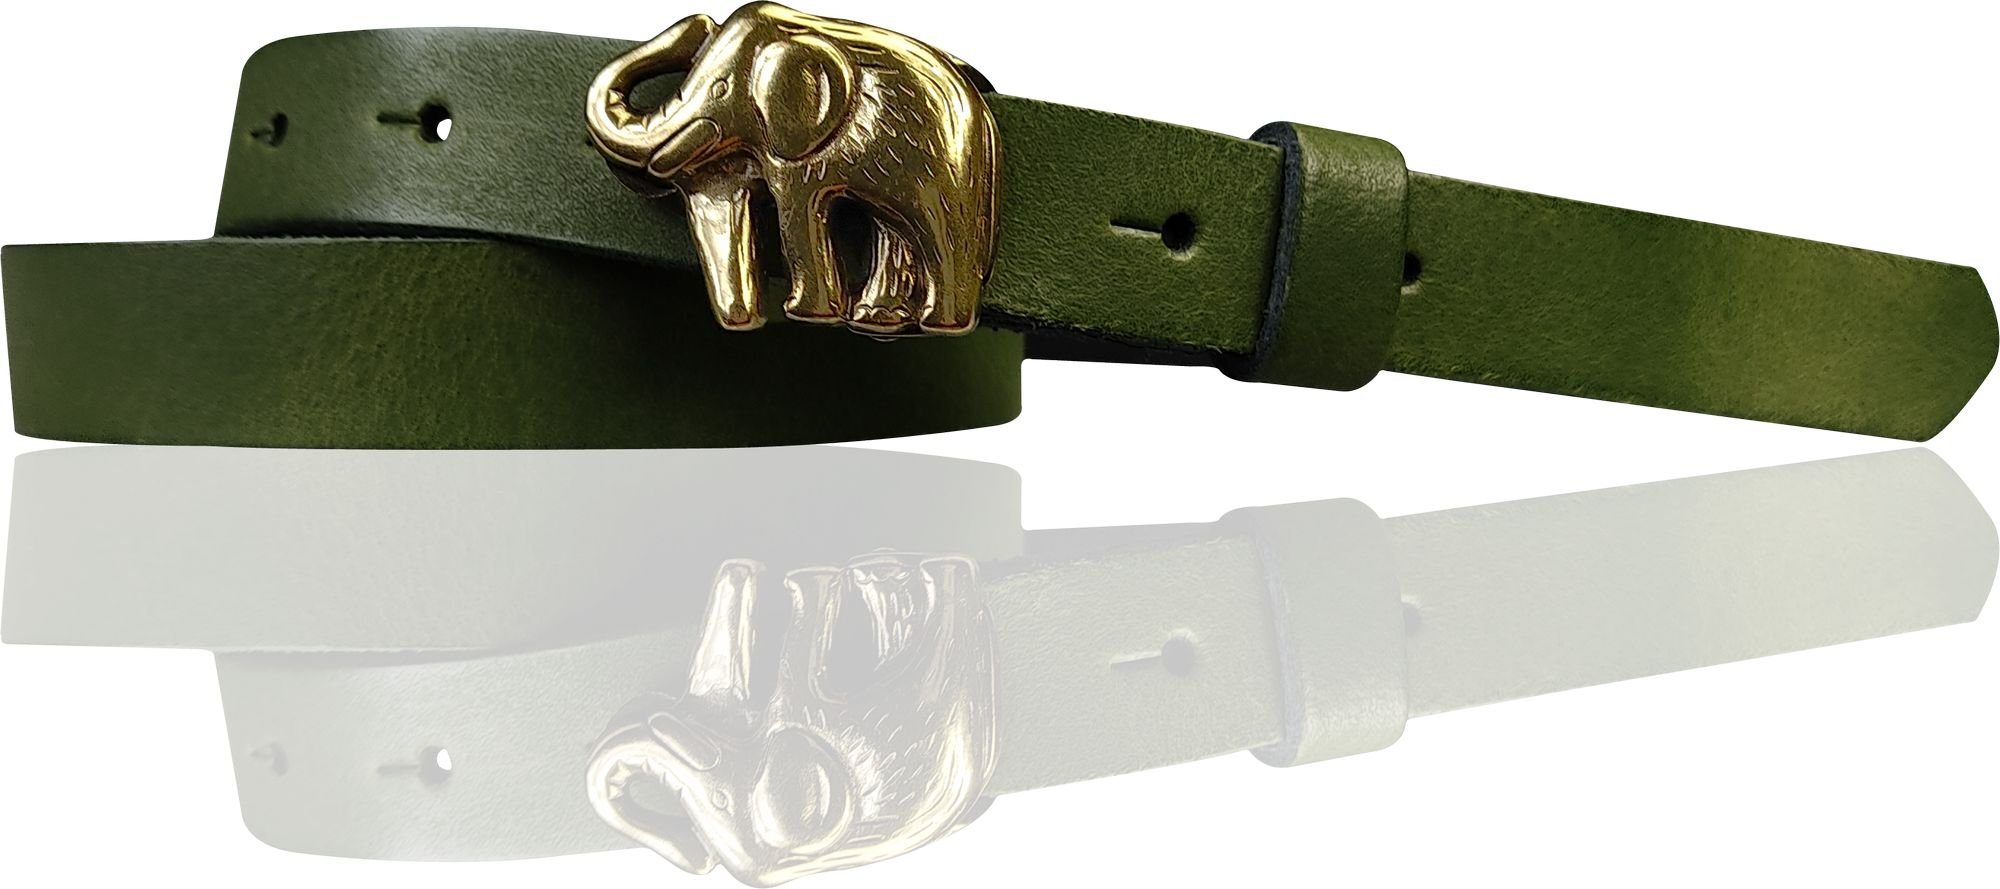 cm Elefantenschnalle Khaki FRONHOFER goldener 18652 Damengürtel mit 2 Koppelgürtel